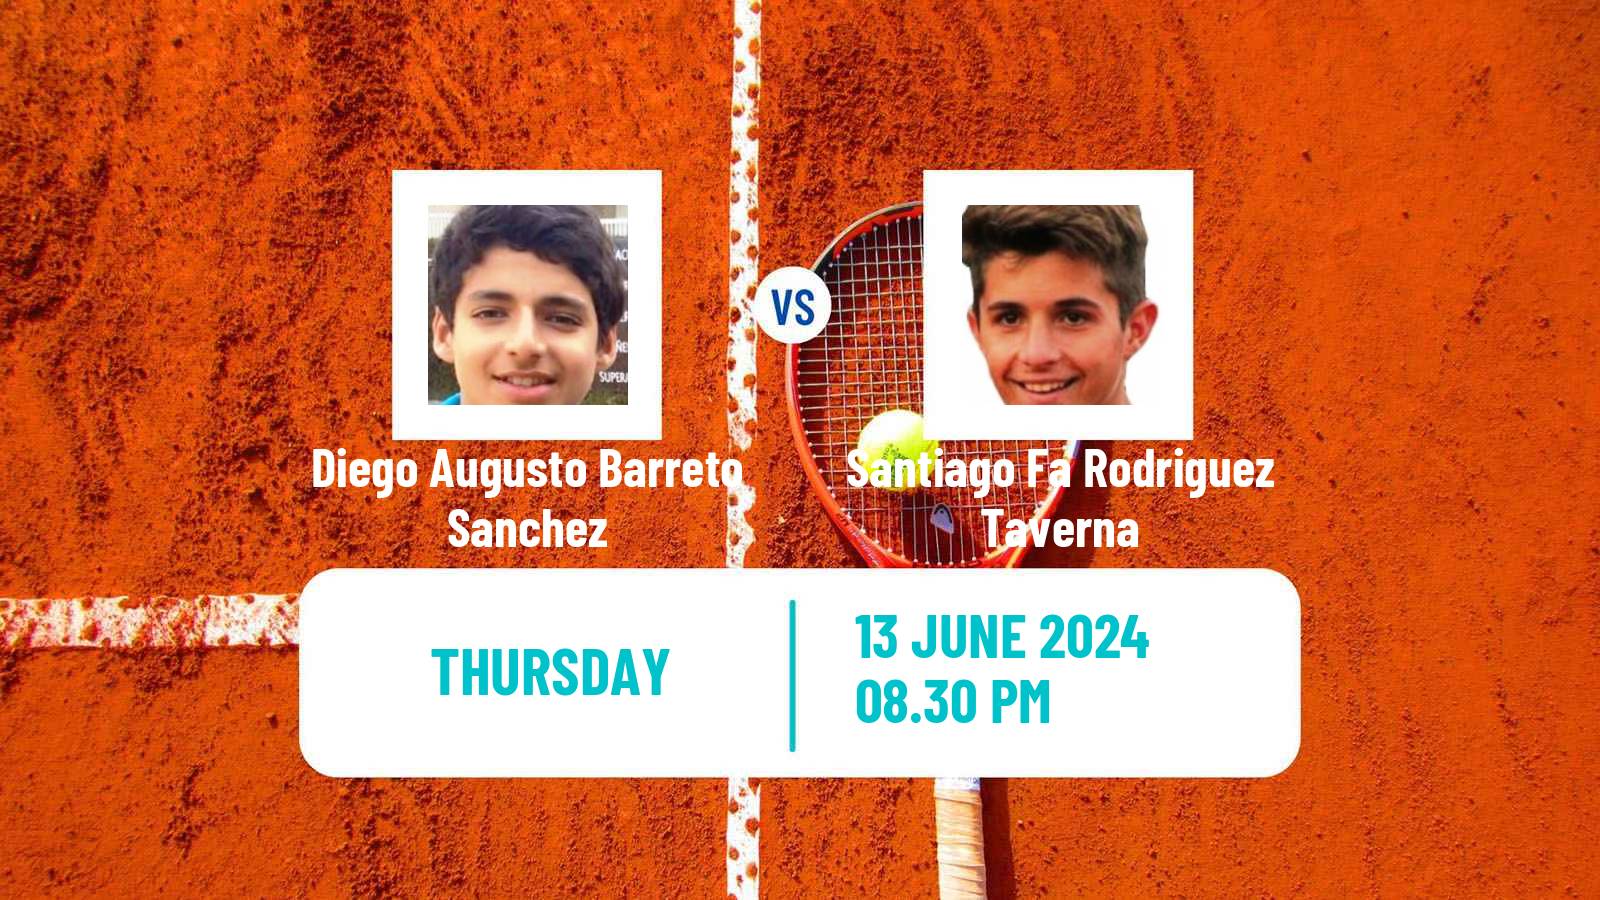 Tennis Lima Challenger Men Diego Augusto Barreto Sanchez - Santiago Fa Rodriguez Taverna